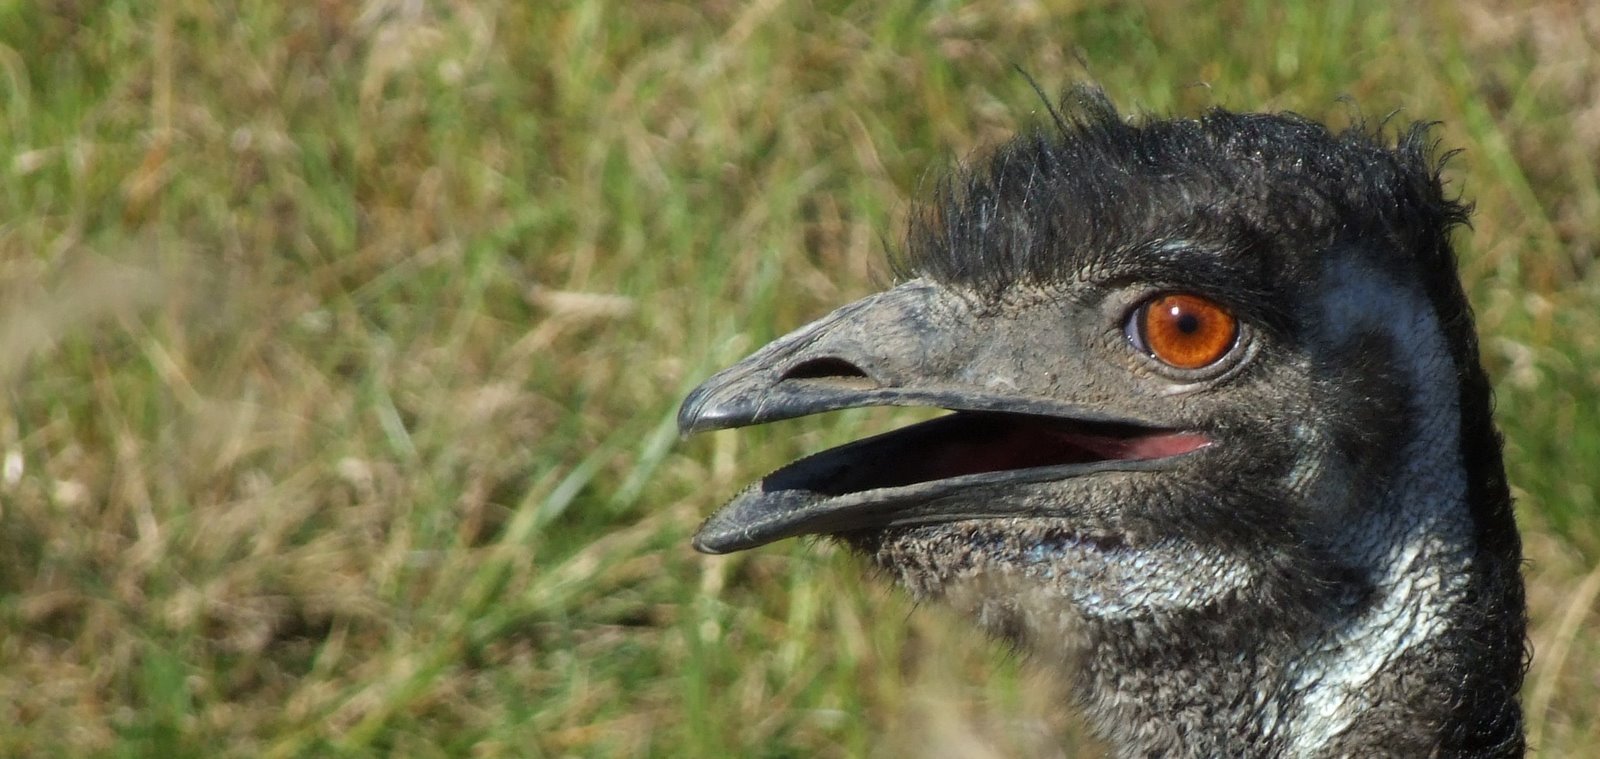 emu head side on view - wide angle wide-screen view - a photo of the Australian Emu